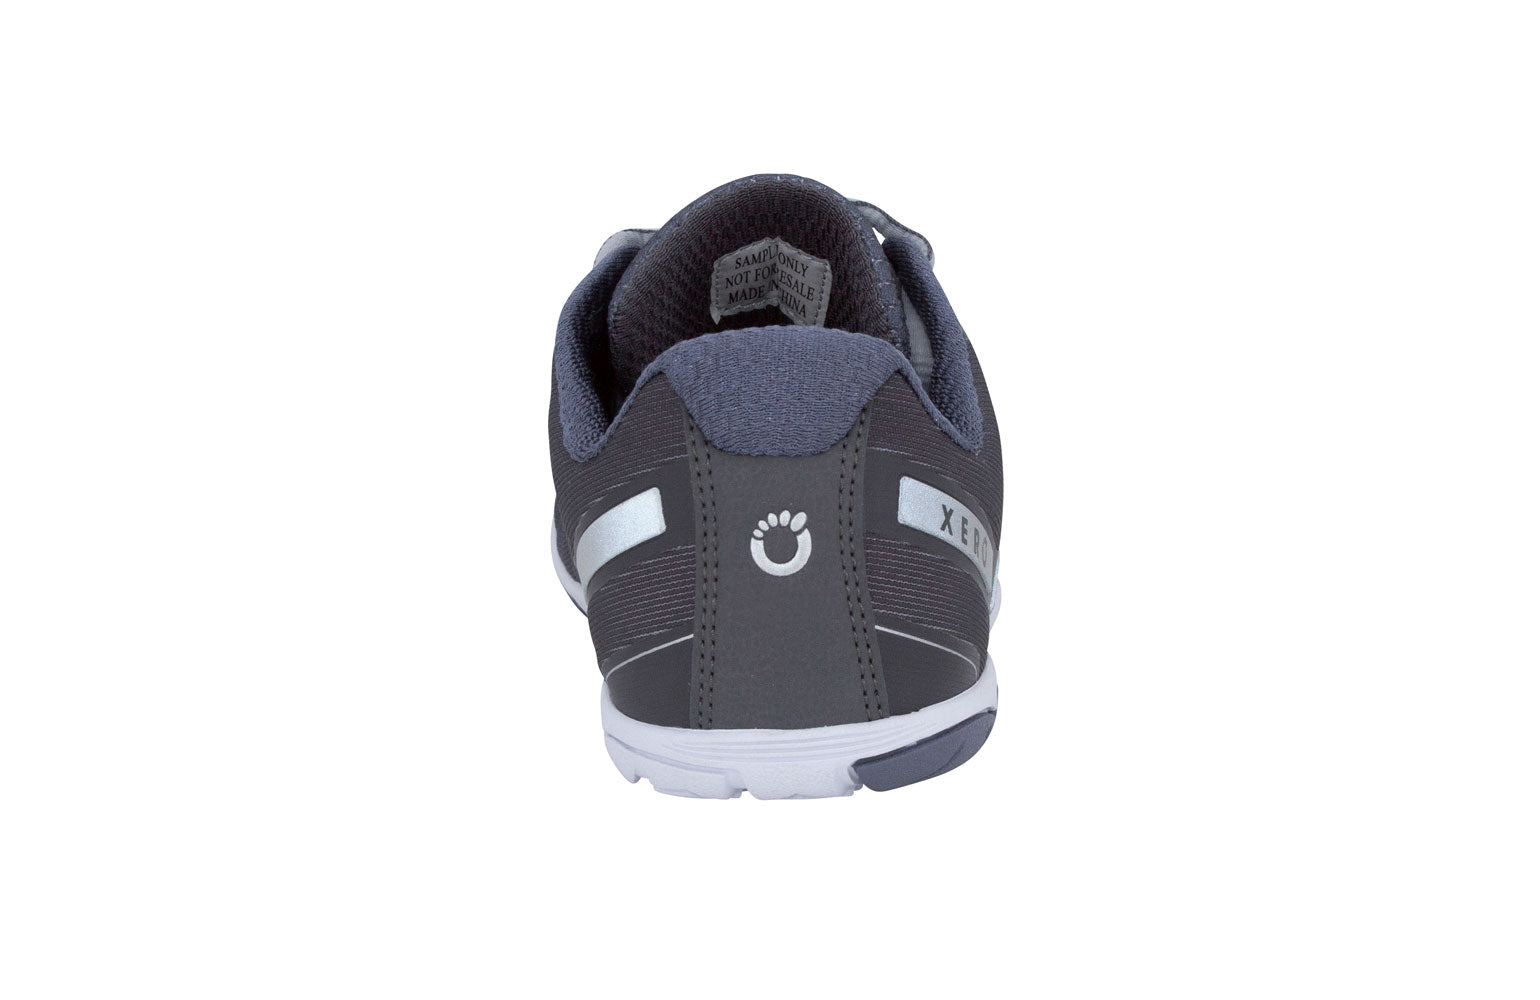 Xero Shoes HFS Womens barfods træningssko/løbesko til kvinder i farven steel gray, bagfra